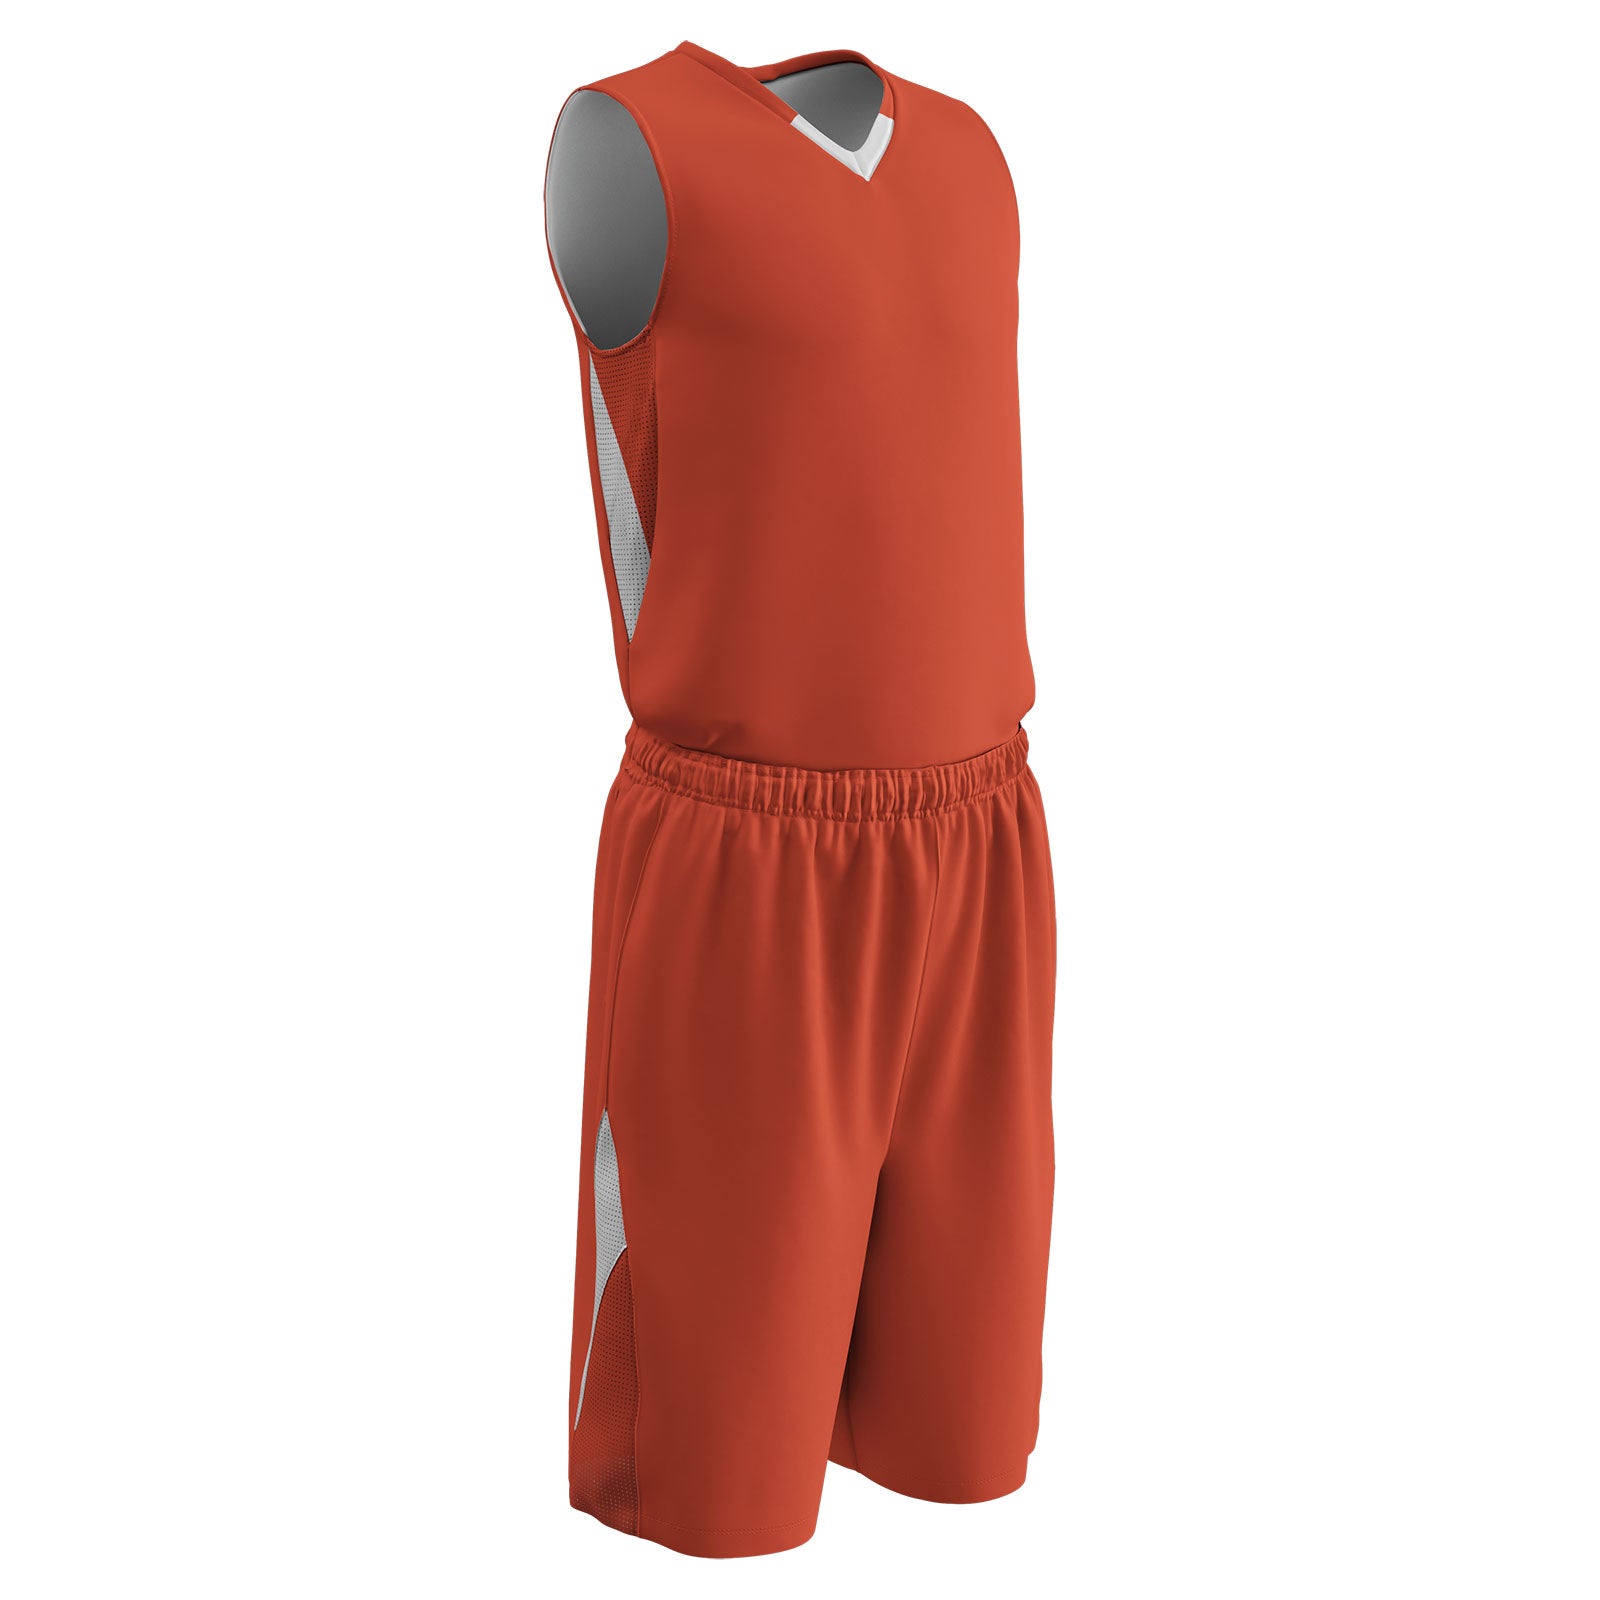 Buy Youth Zone Reversible Basketball Jersey by Champro Sports